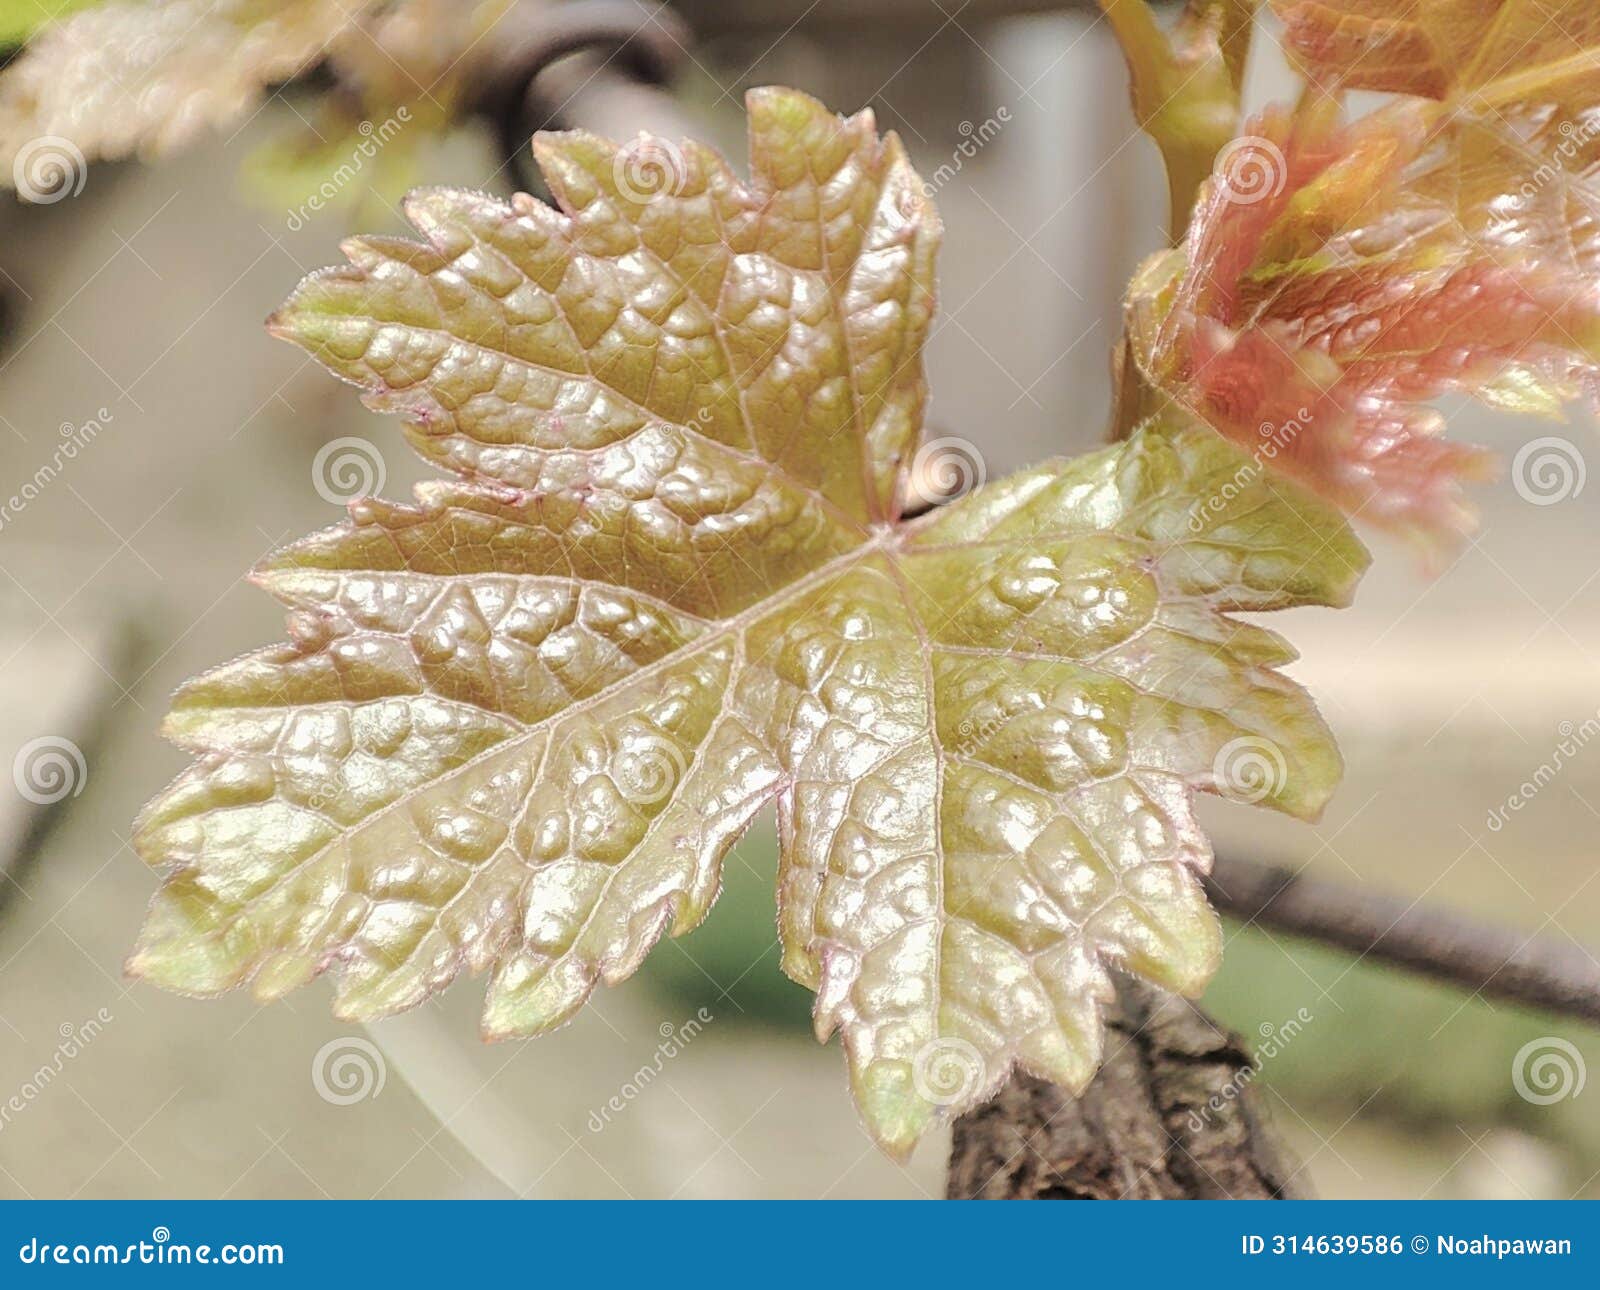 beautiful adn akttraktive young vine leaves